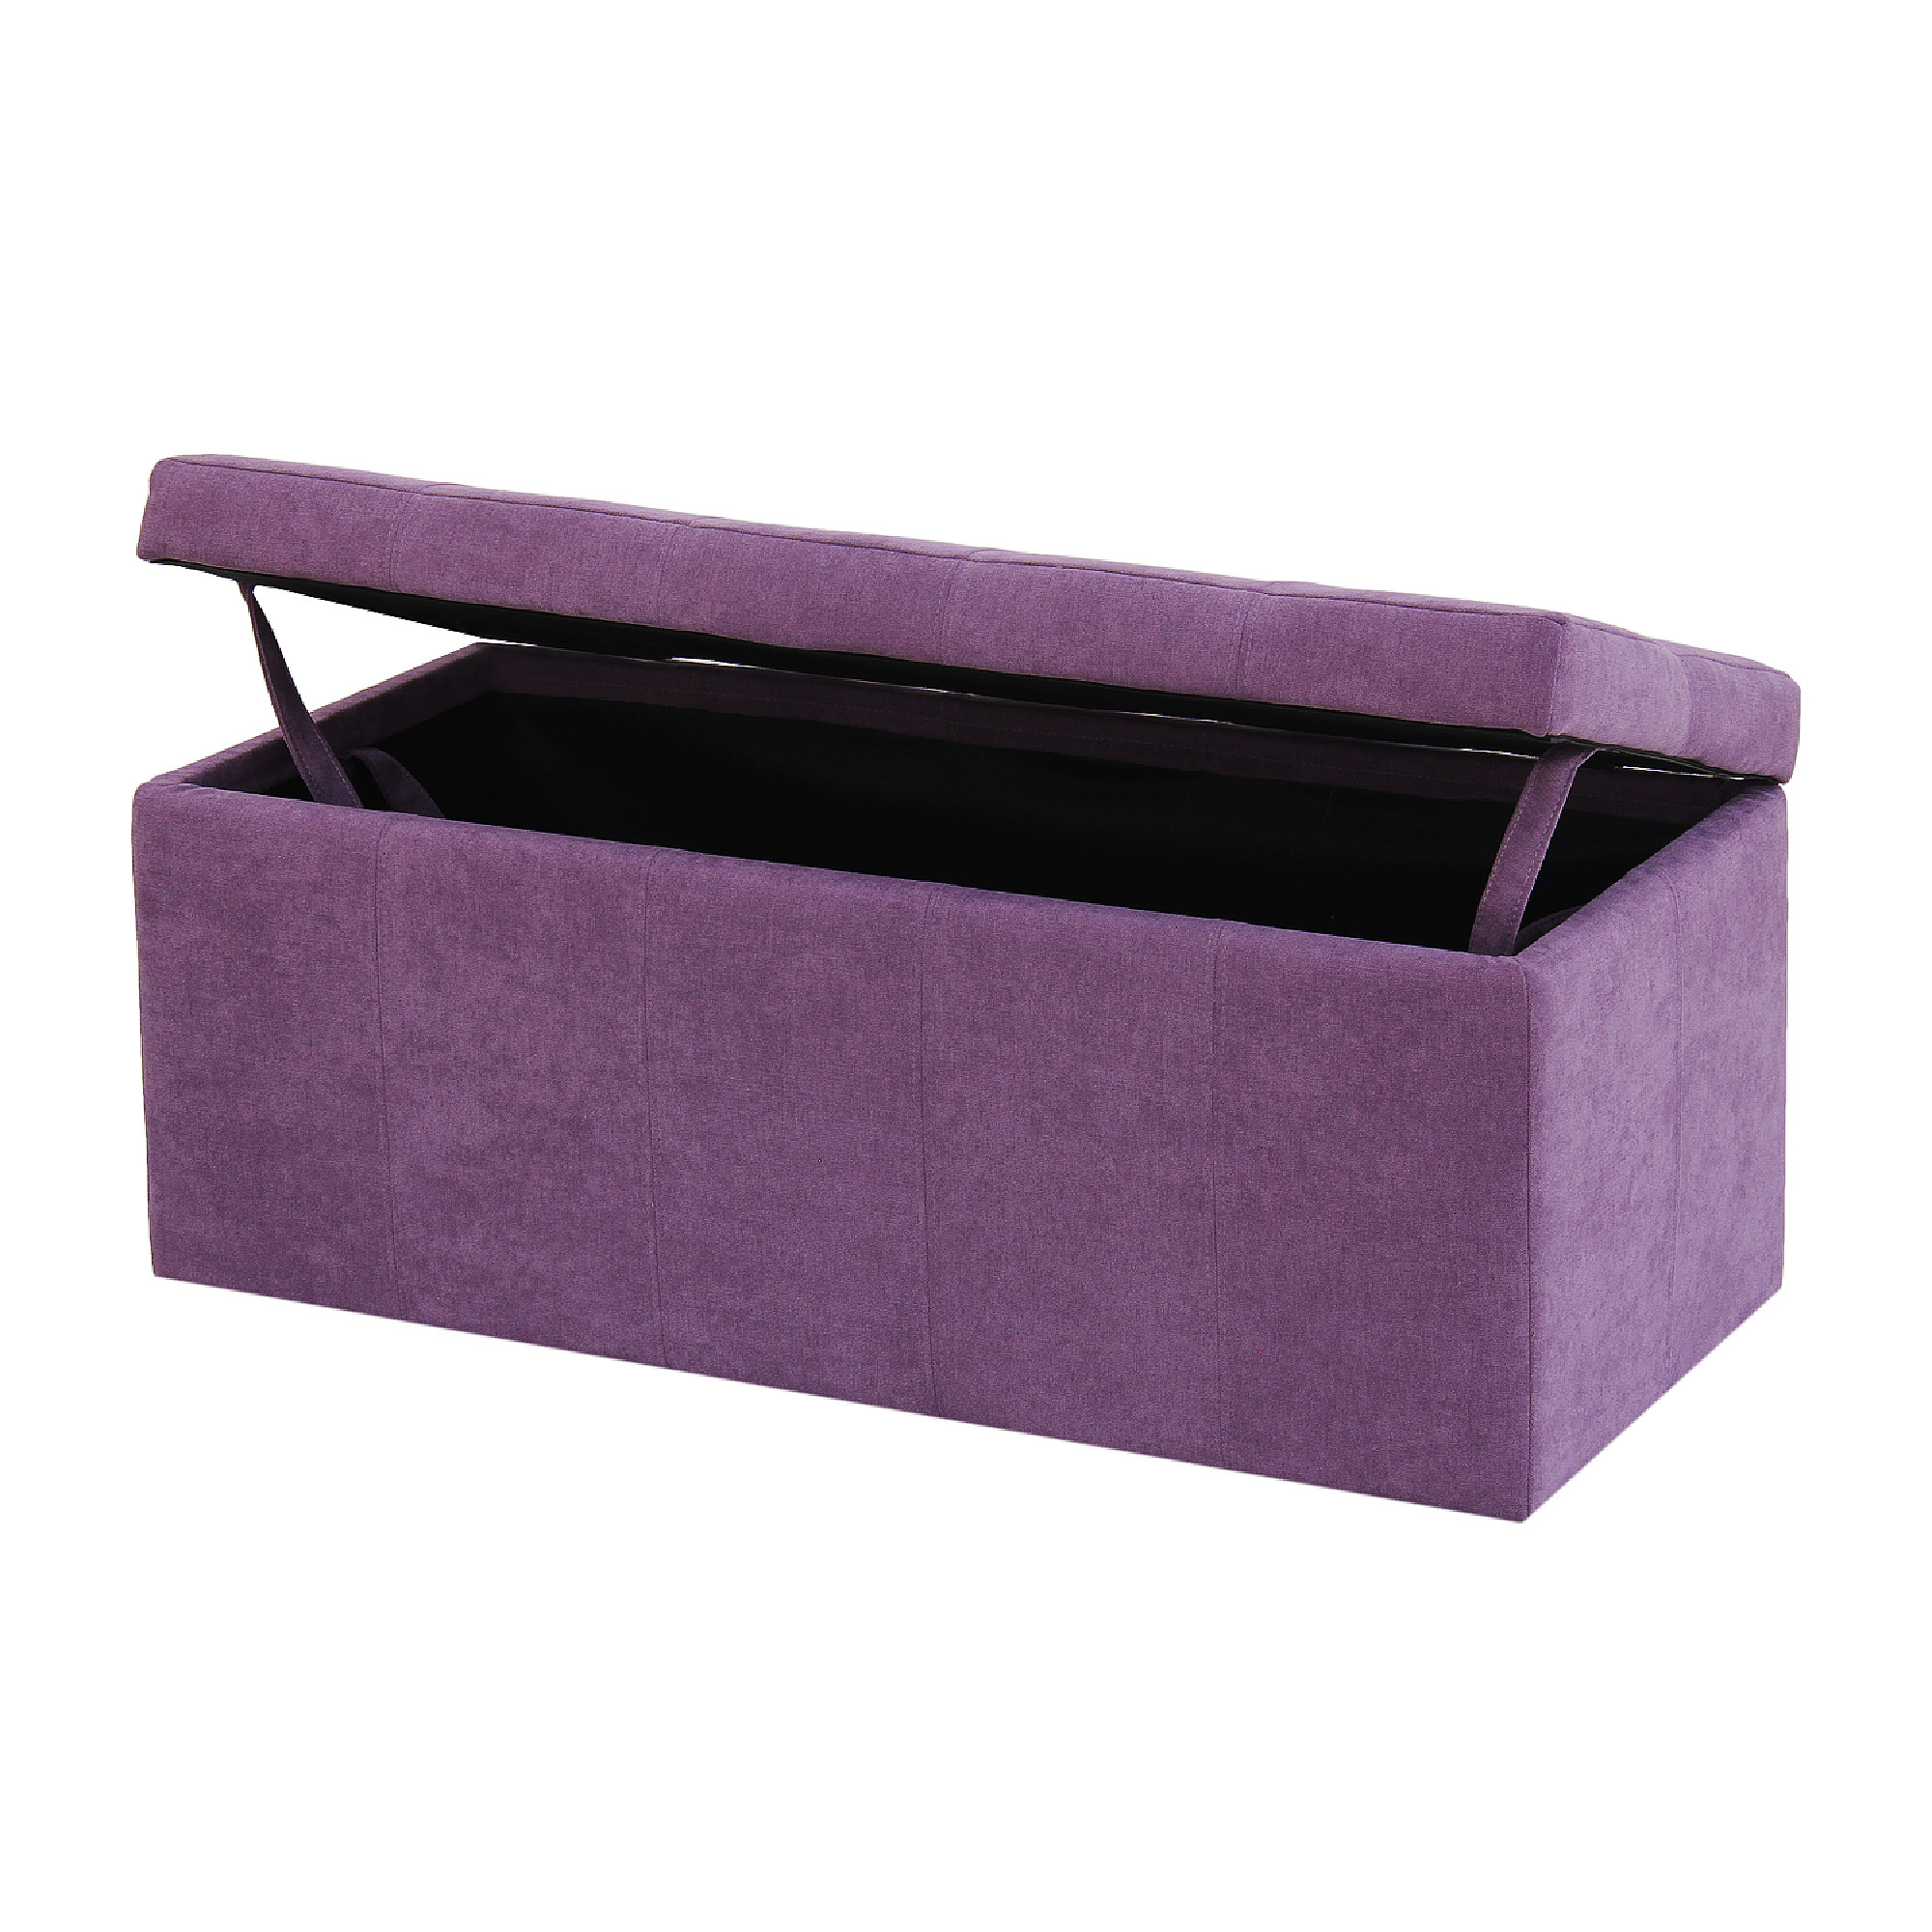 Банкетка Dreambag лонг фиолетовый велюр 100х46х46, размер 100х46х46 см - фото 3